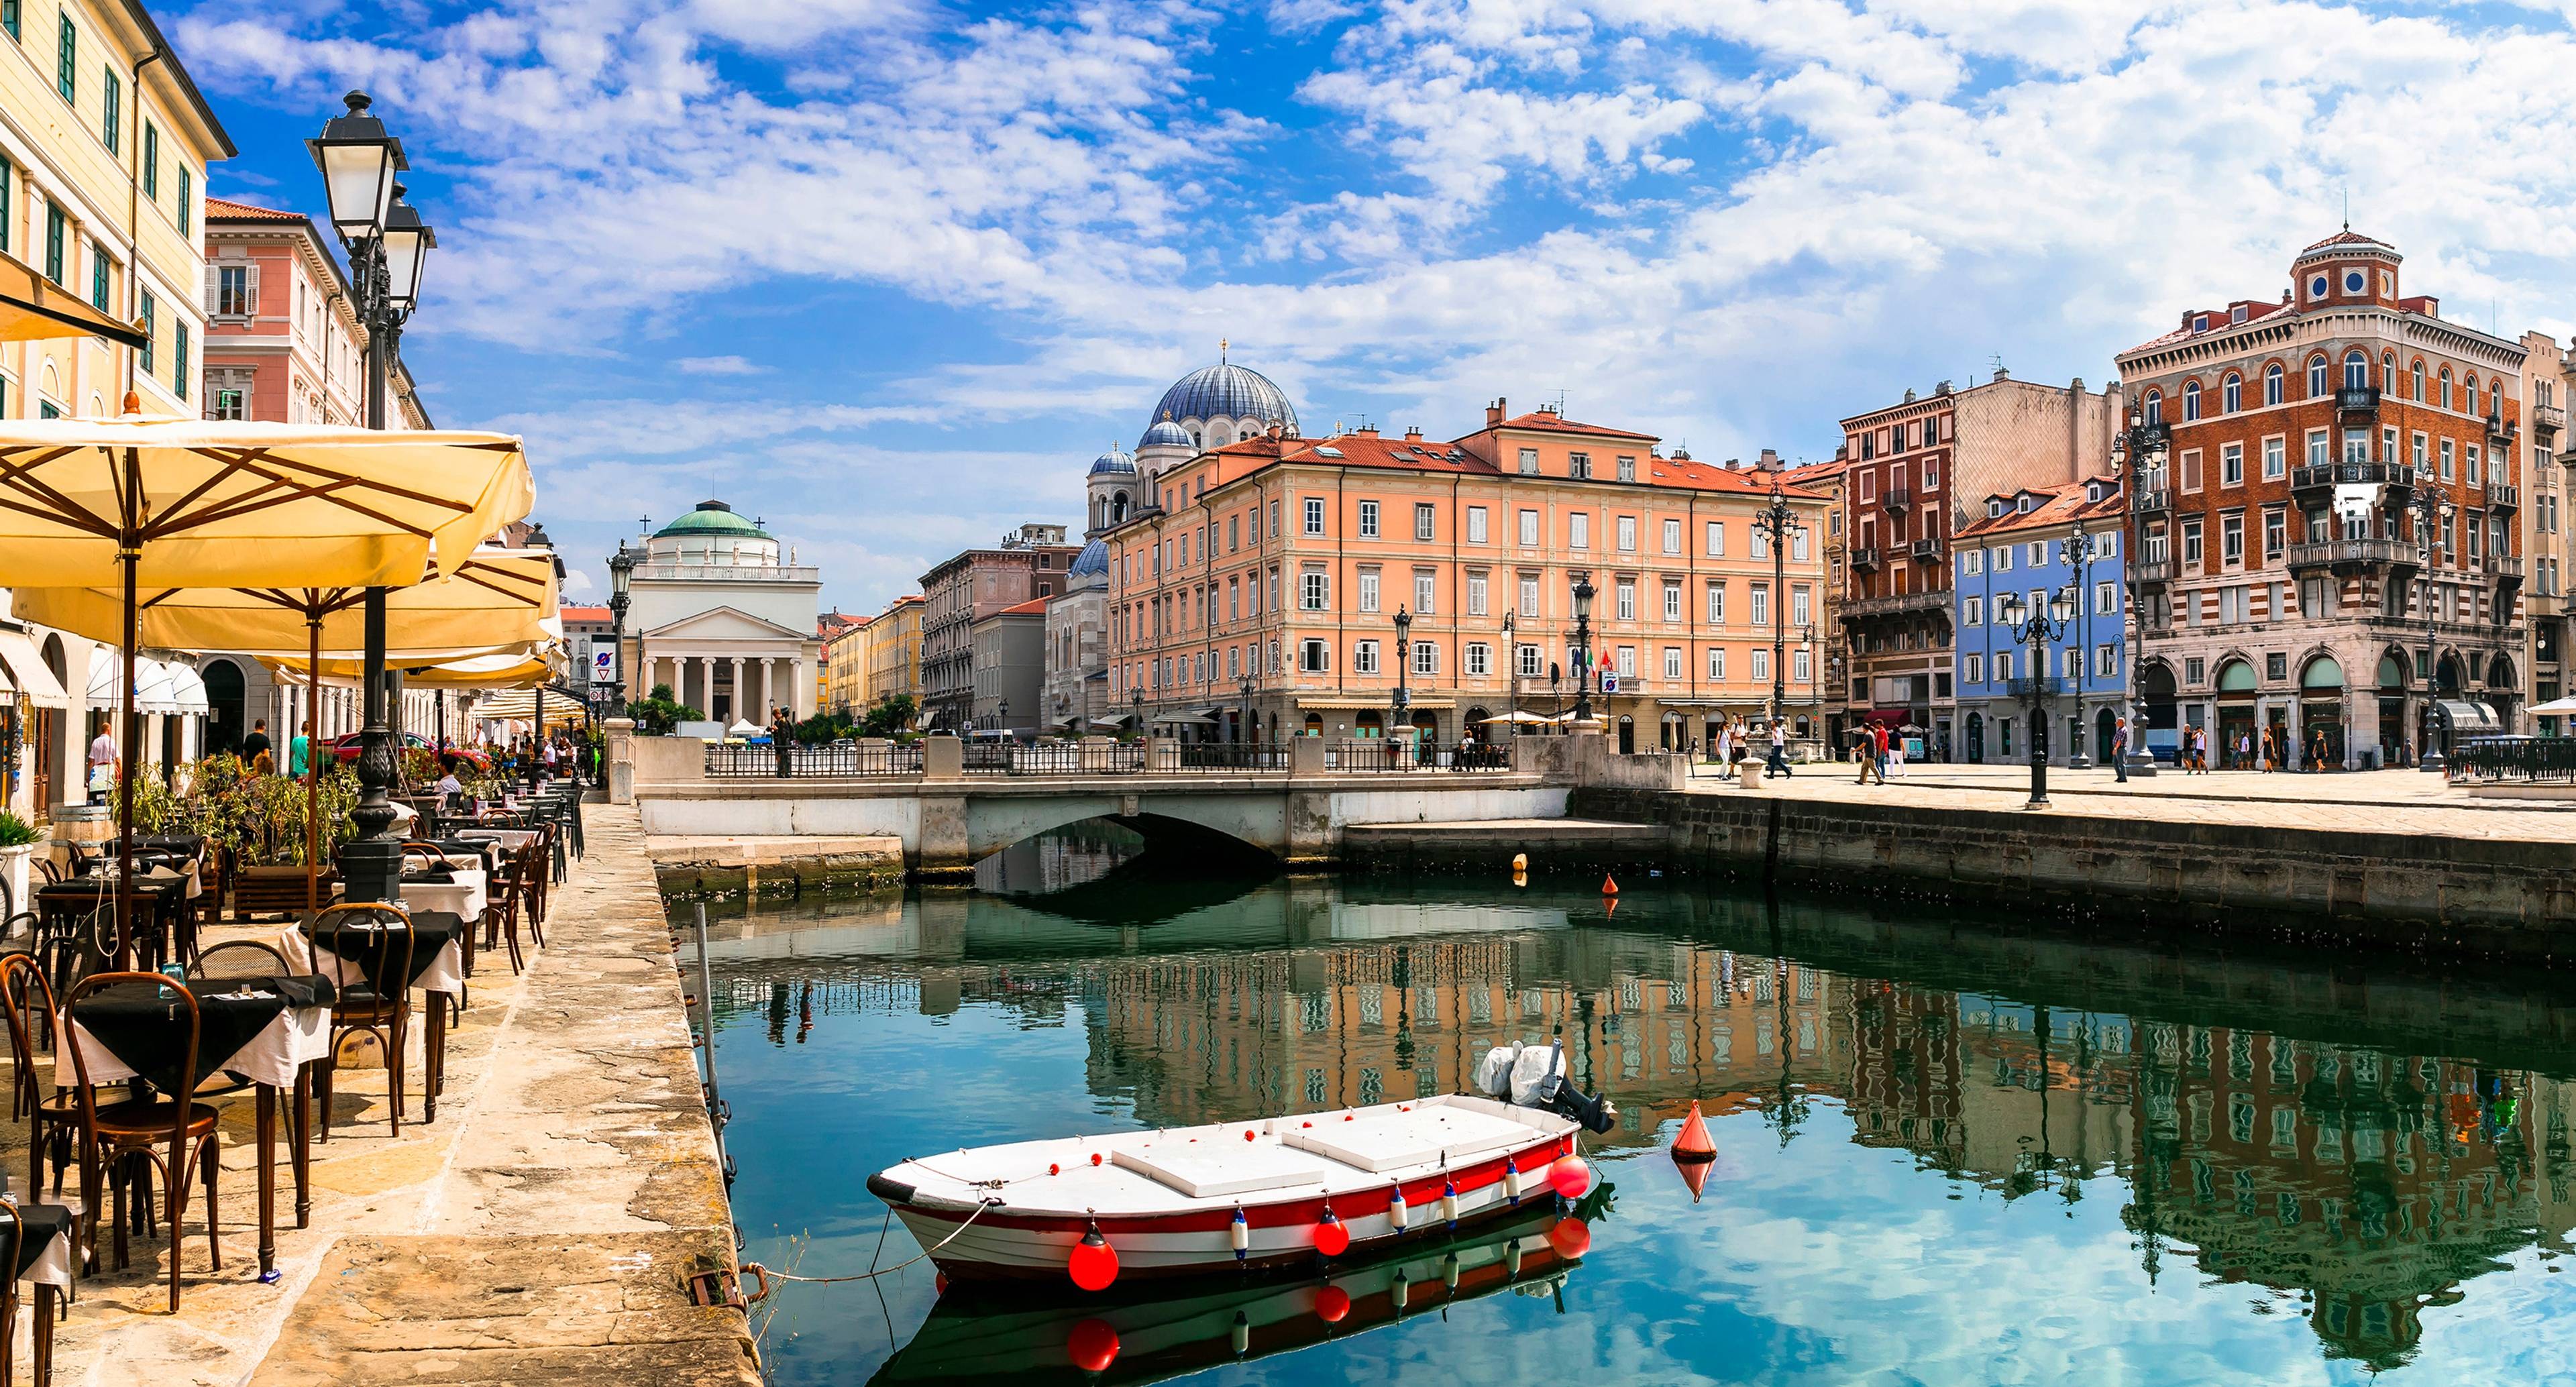 La bella città di Trieste